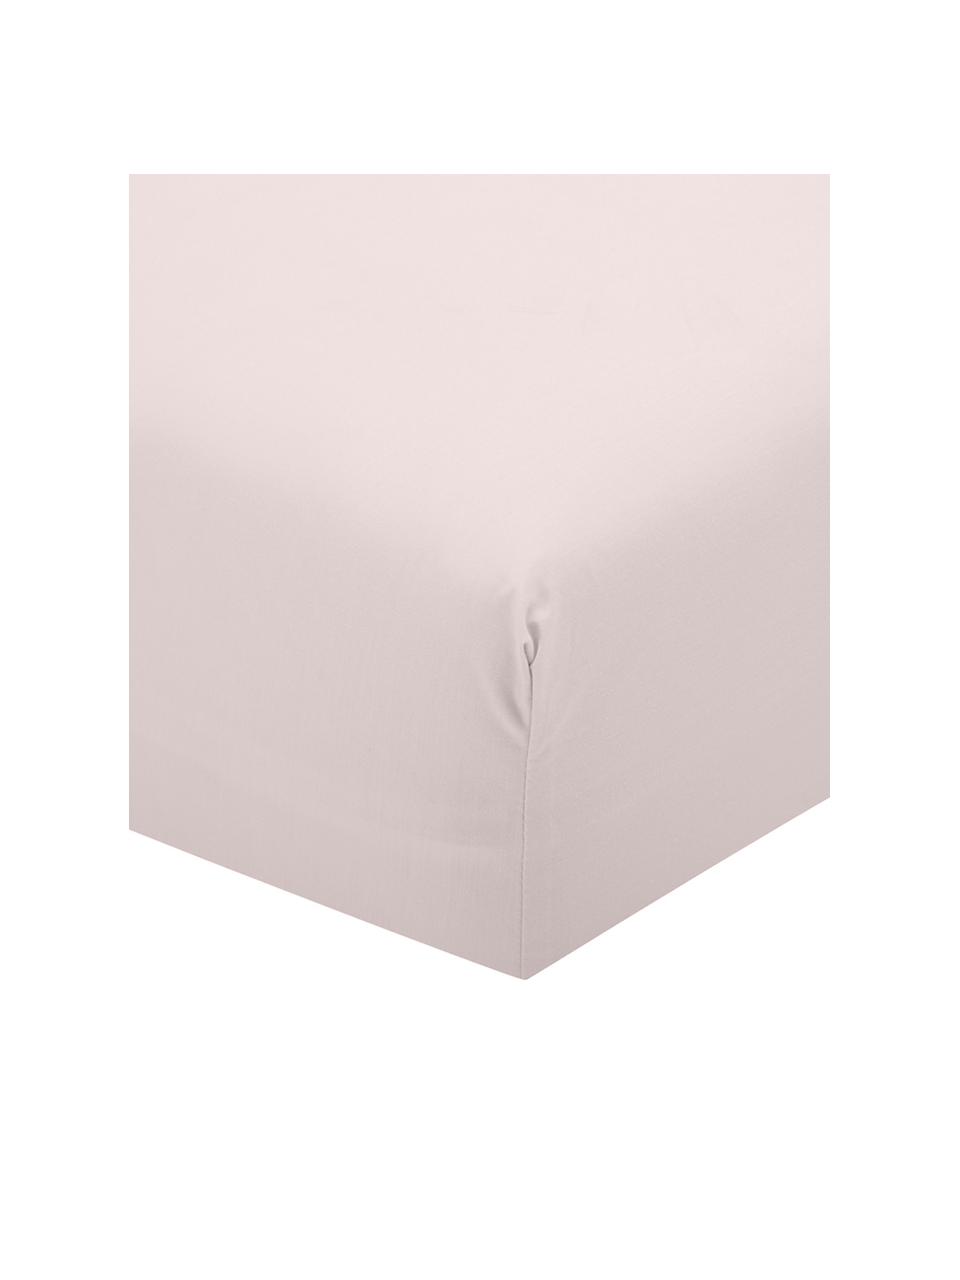 Hoeslaken Elsie, katoen perkal, Weeftechniek: perkal Draaddichtheid 200, Roze, B 160 x L 200 cm